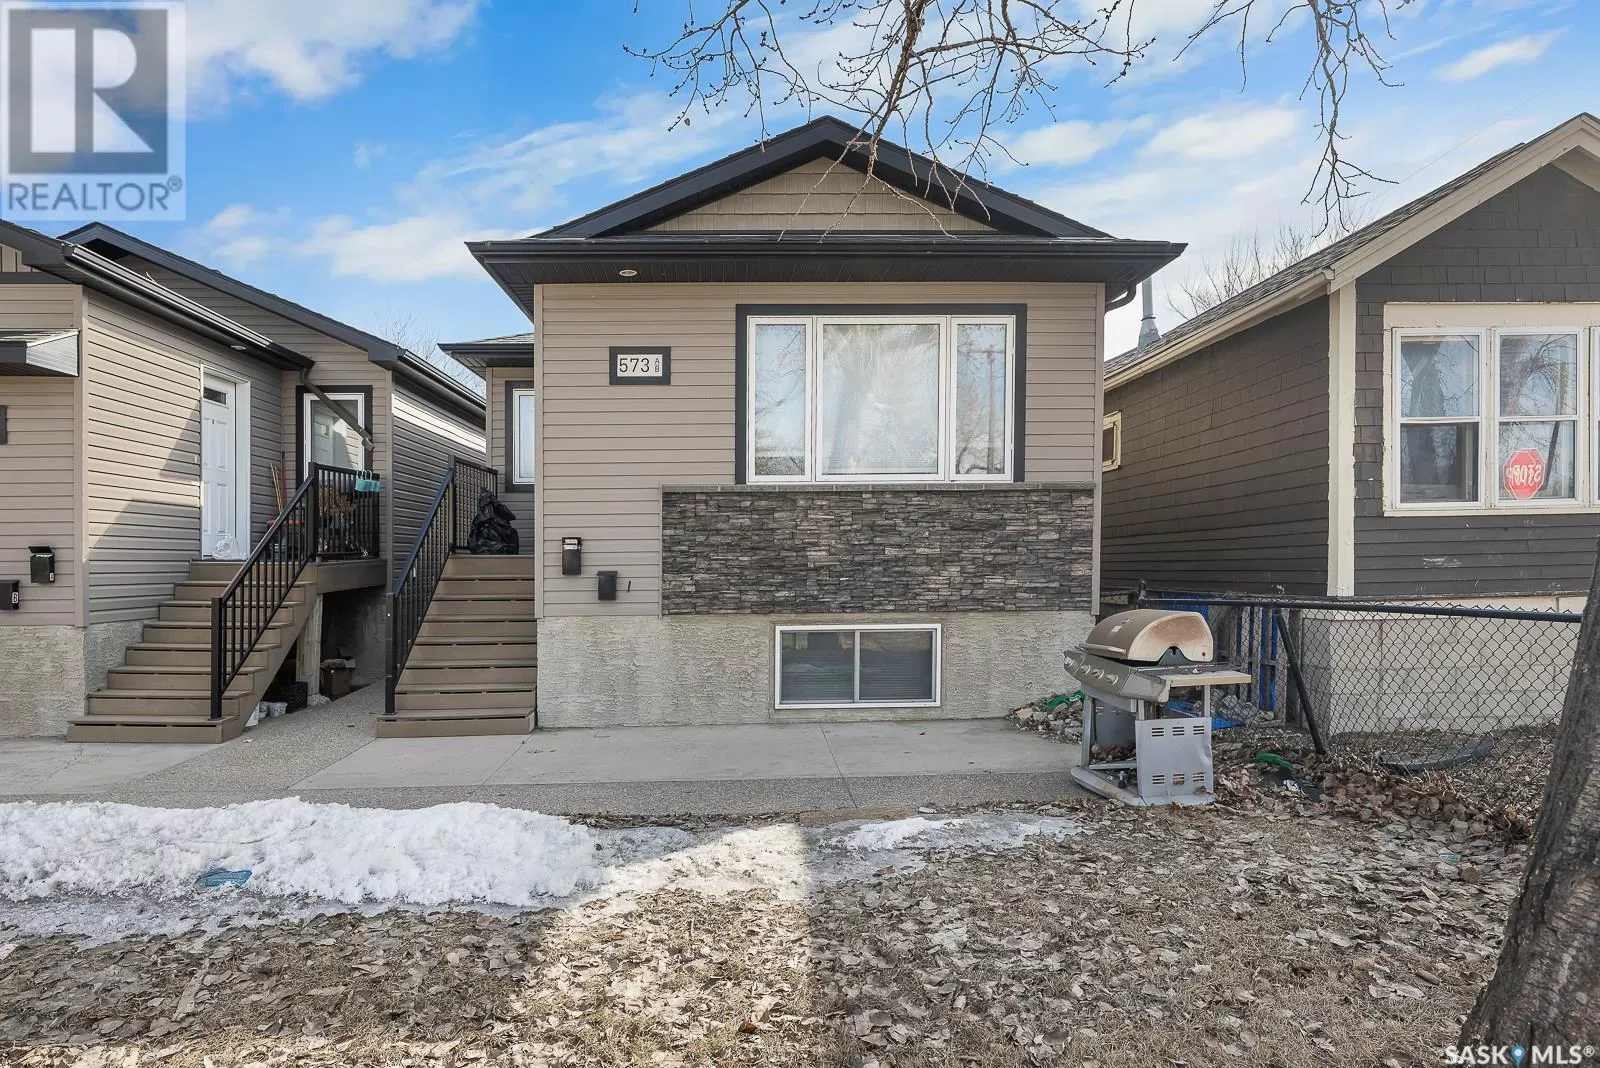 House for rent: 573 Elphinstone Street, Regina, Saskatchewan S4R 3W8